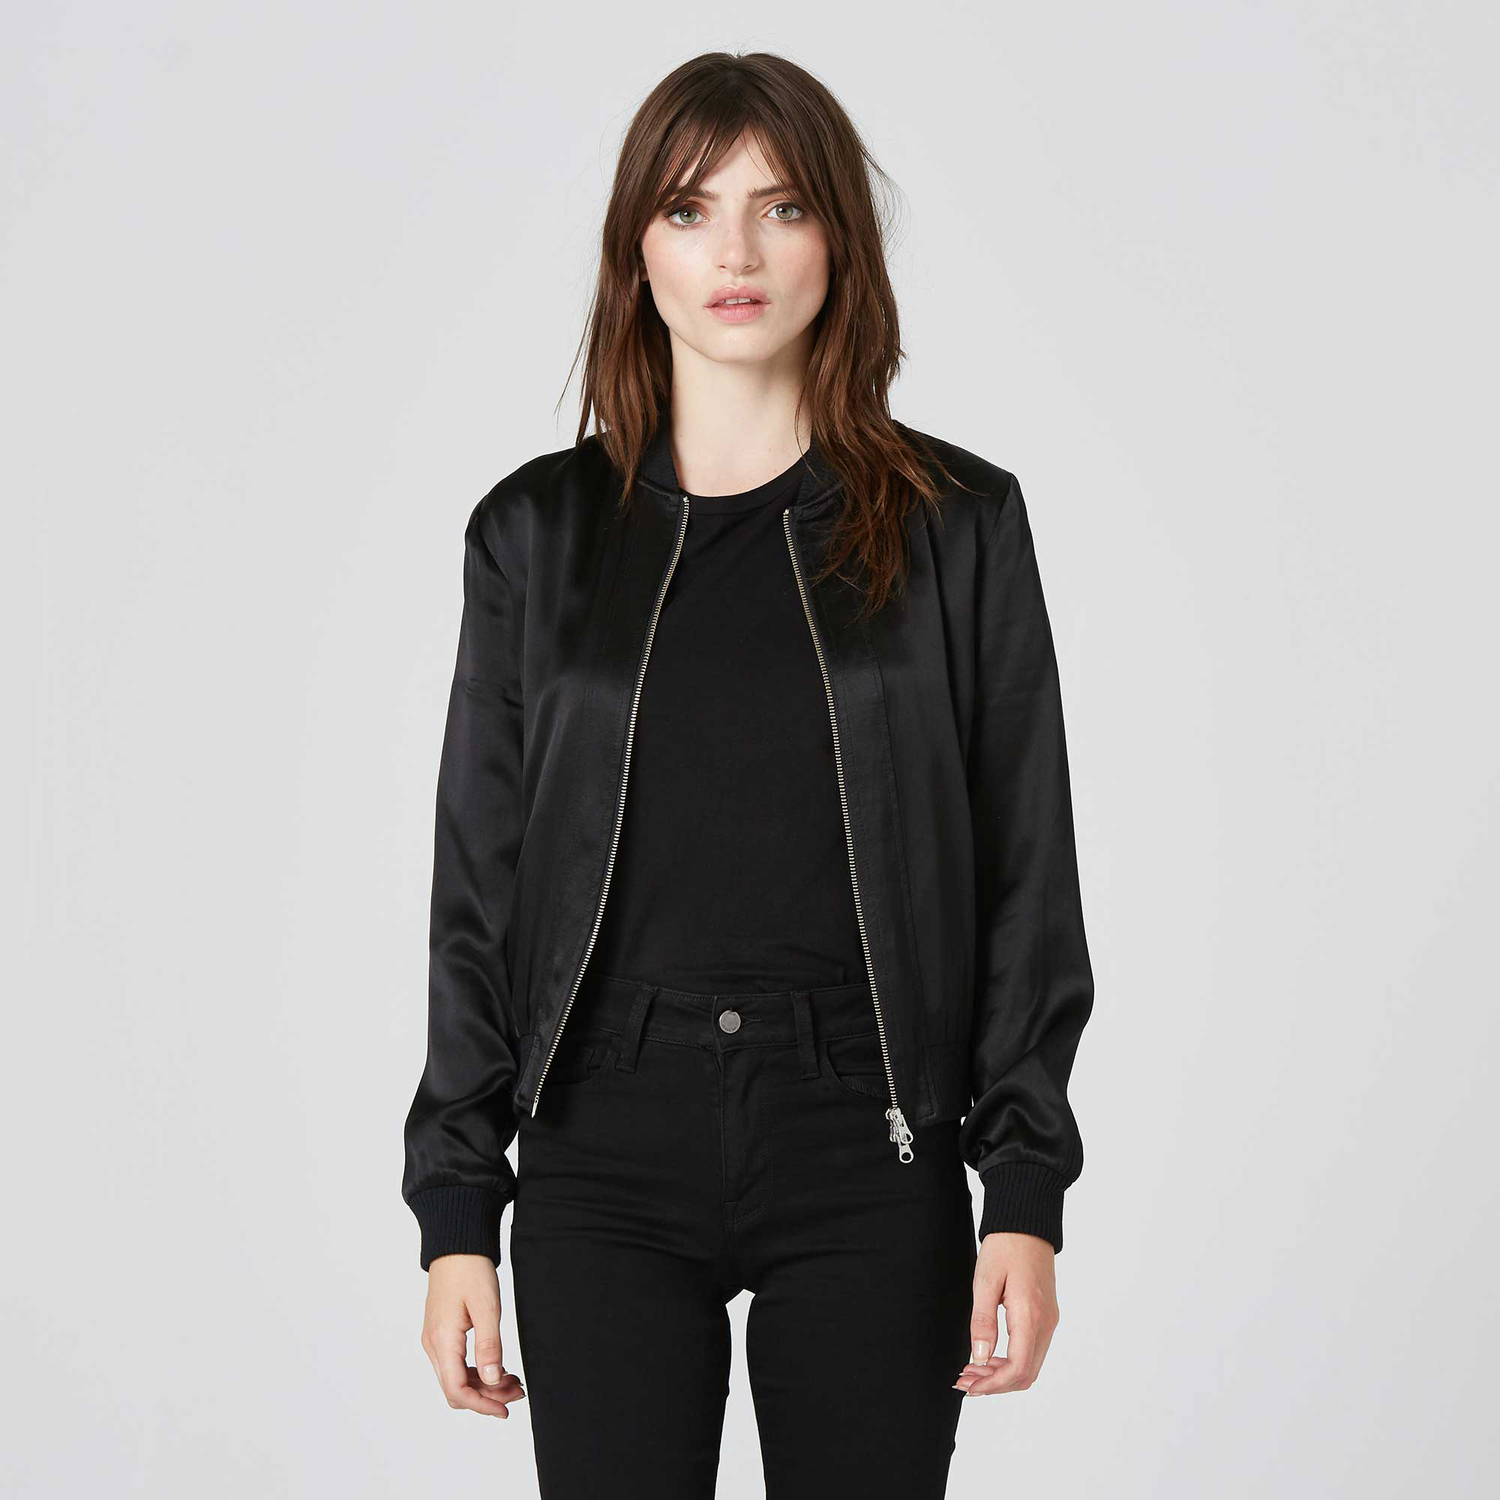 Bomber Jackets for Women womens silk bomber jacket in black SMBFHKE